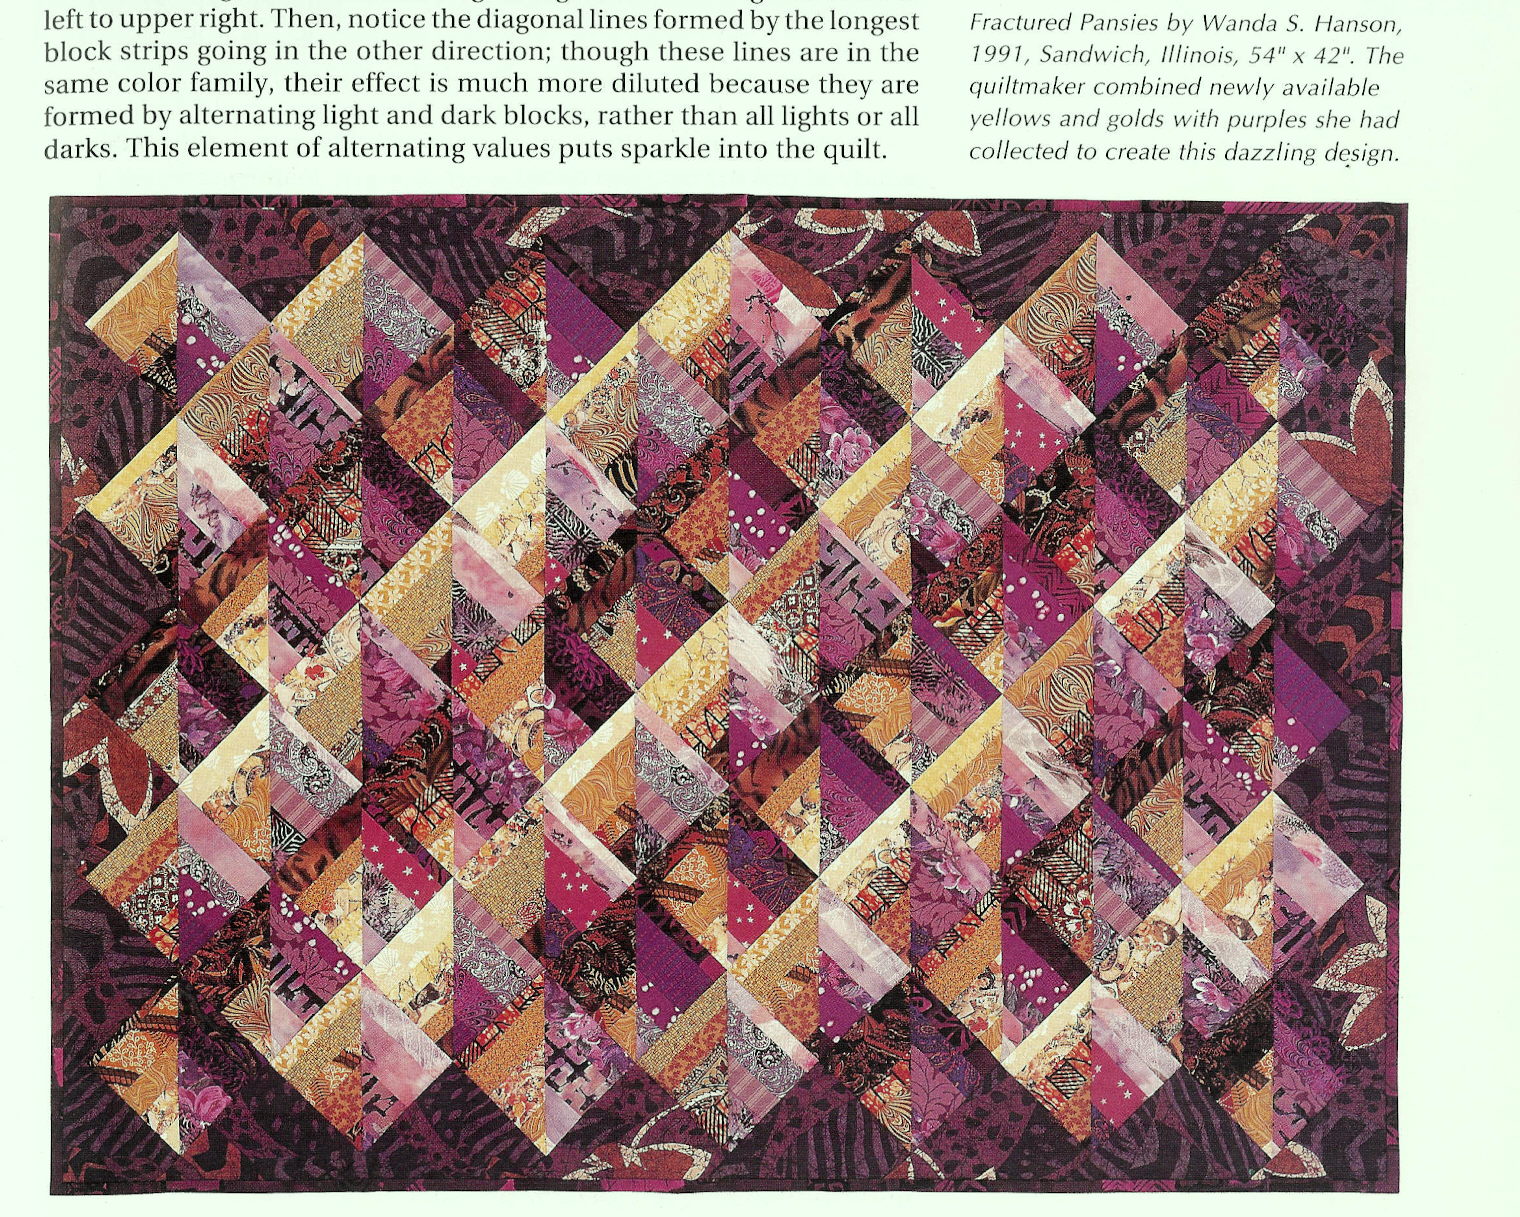 Wanda S. Hanson Published Strips that sizzle.jpg